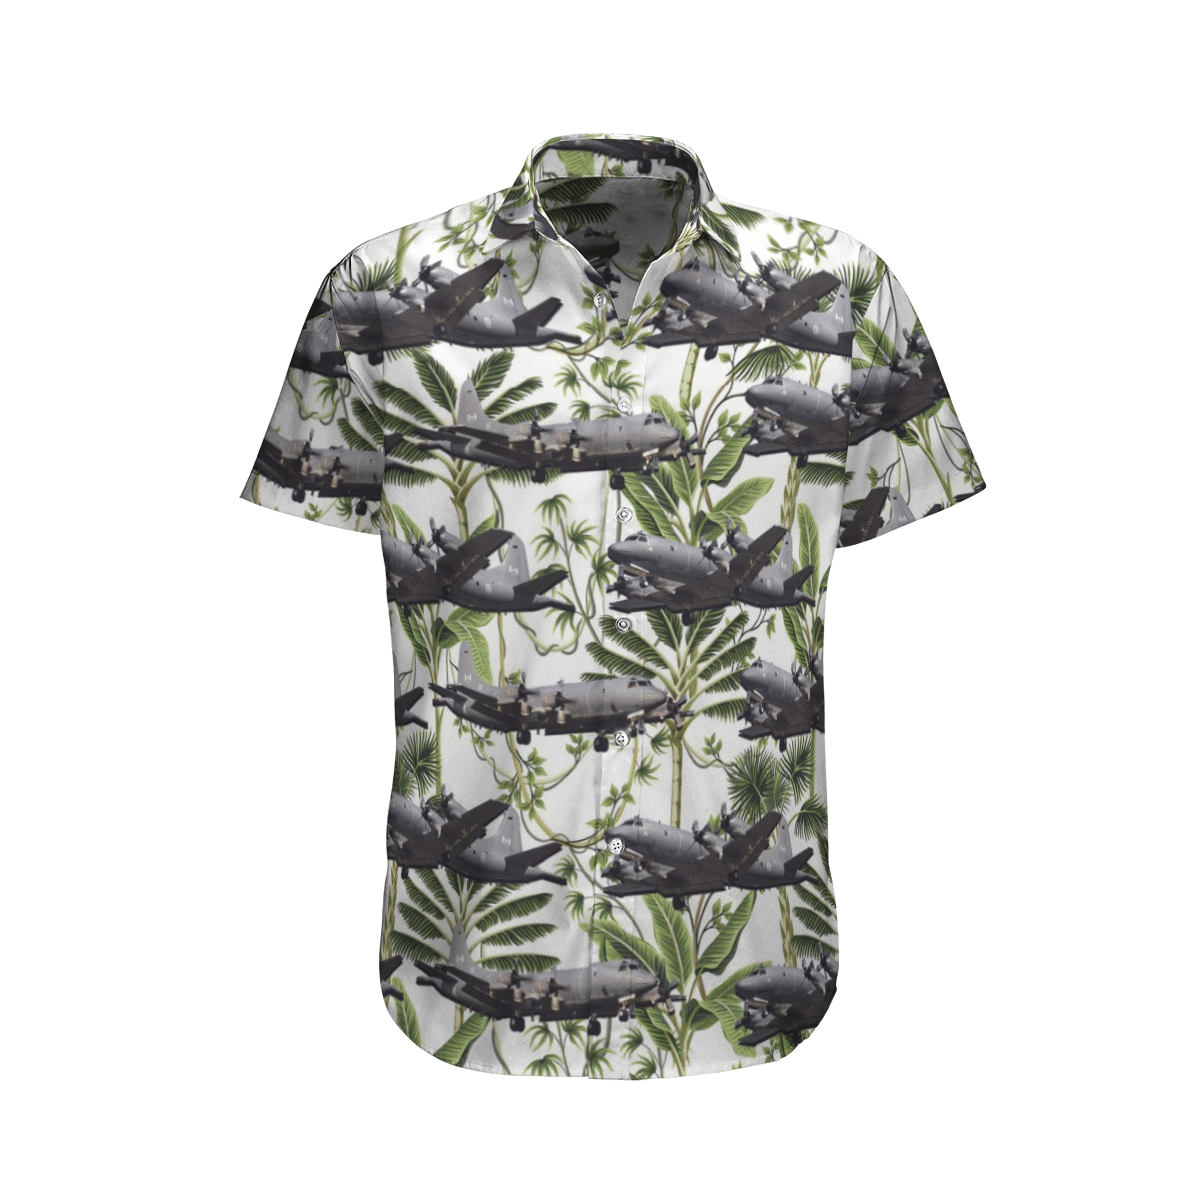 Get a new Hawaiian shirt to enjoy summer vacation 105